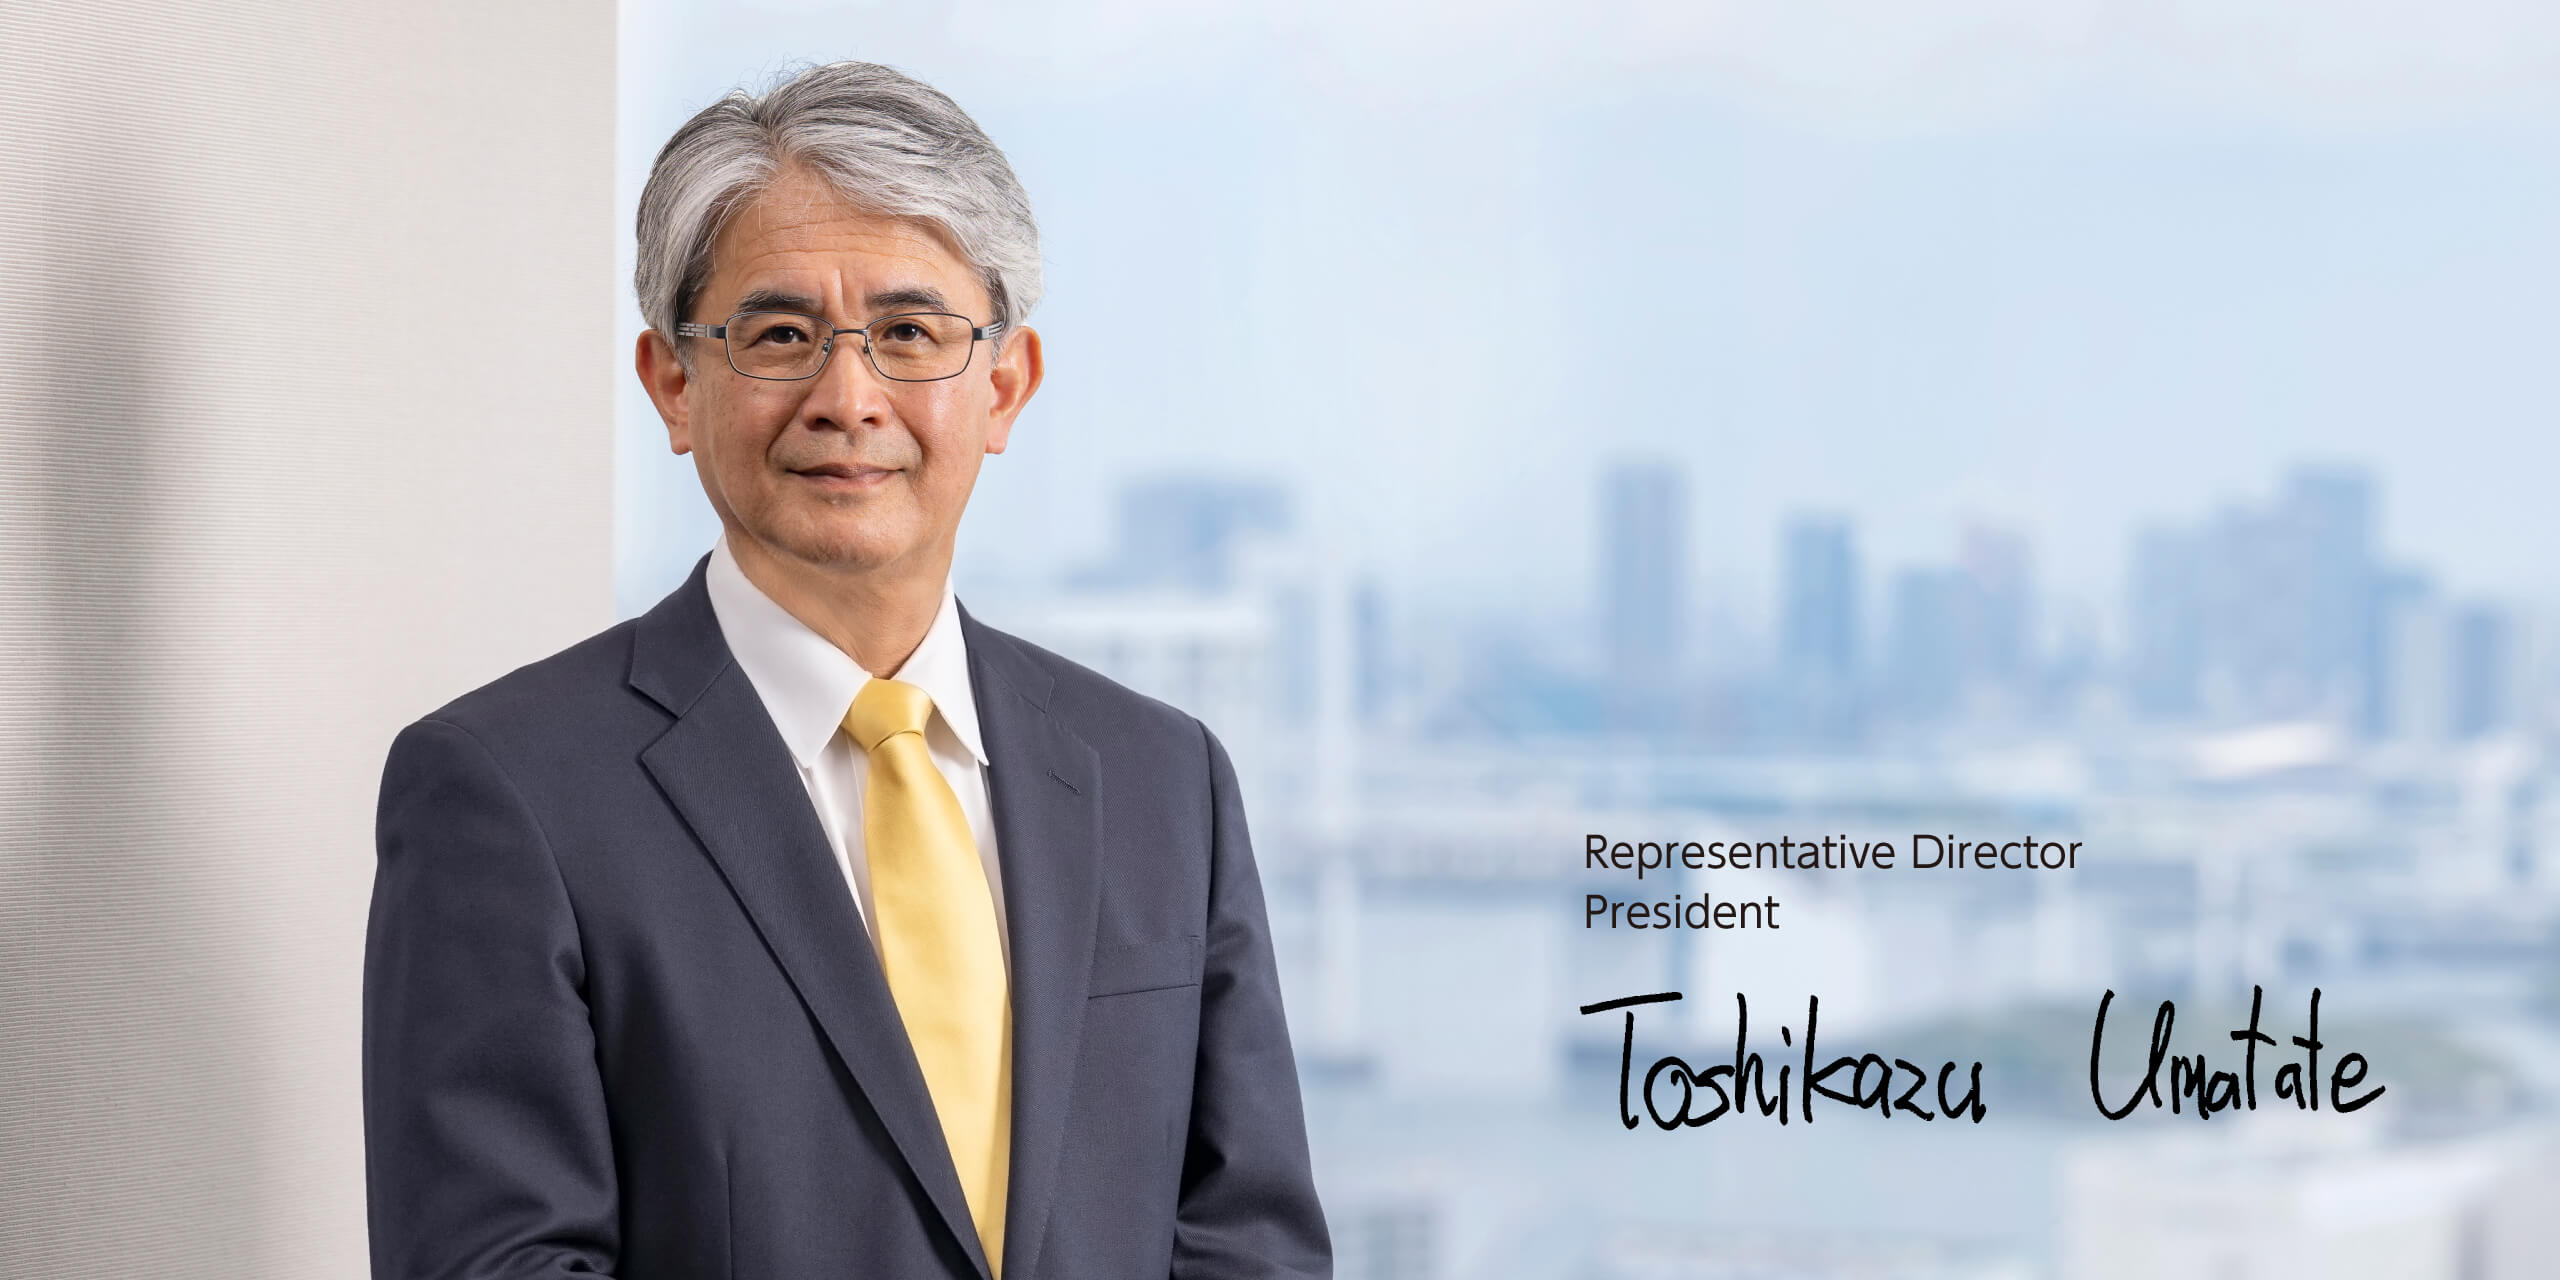 Representative Director President Toshikazu Umatate